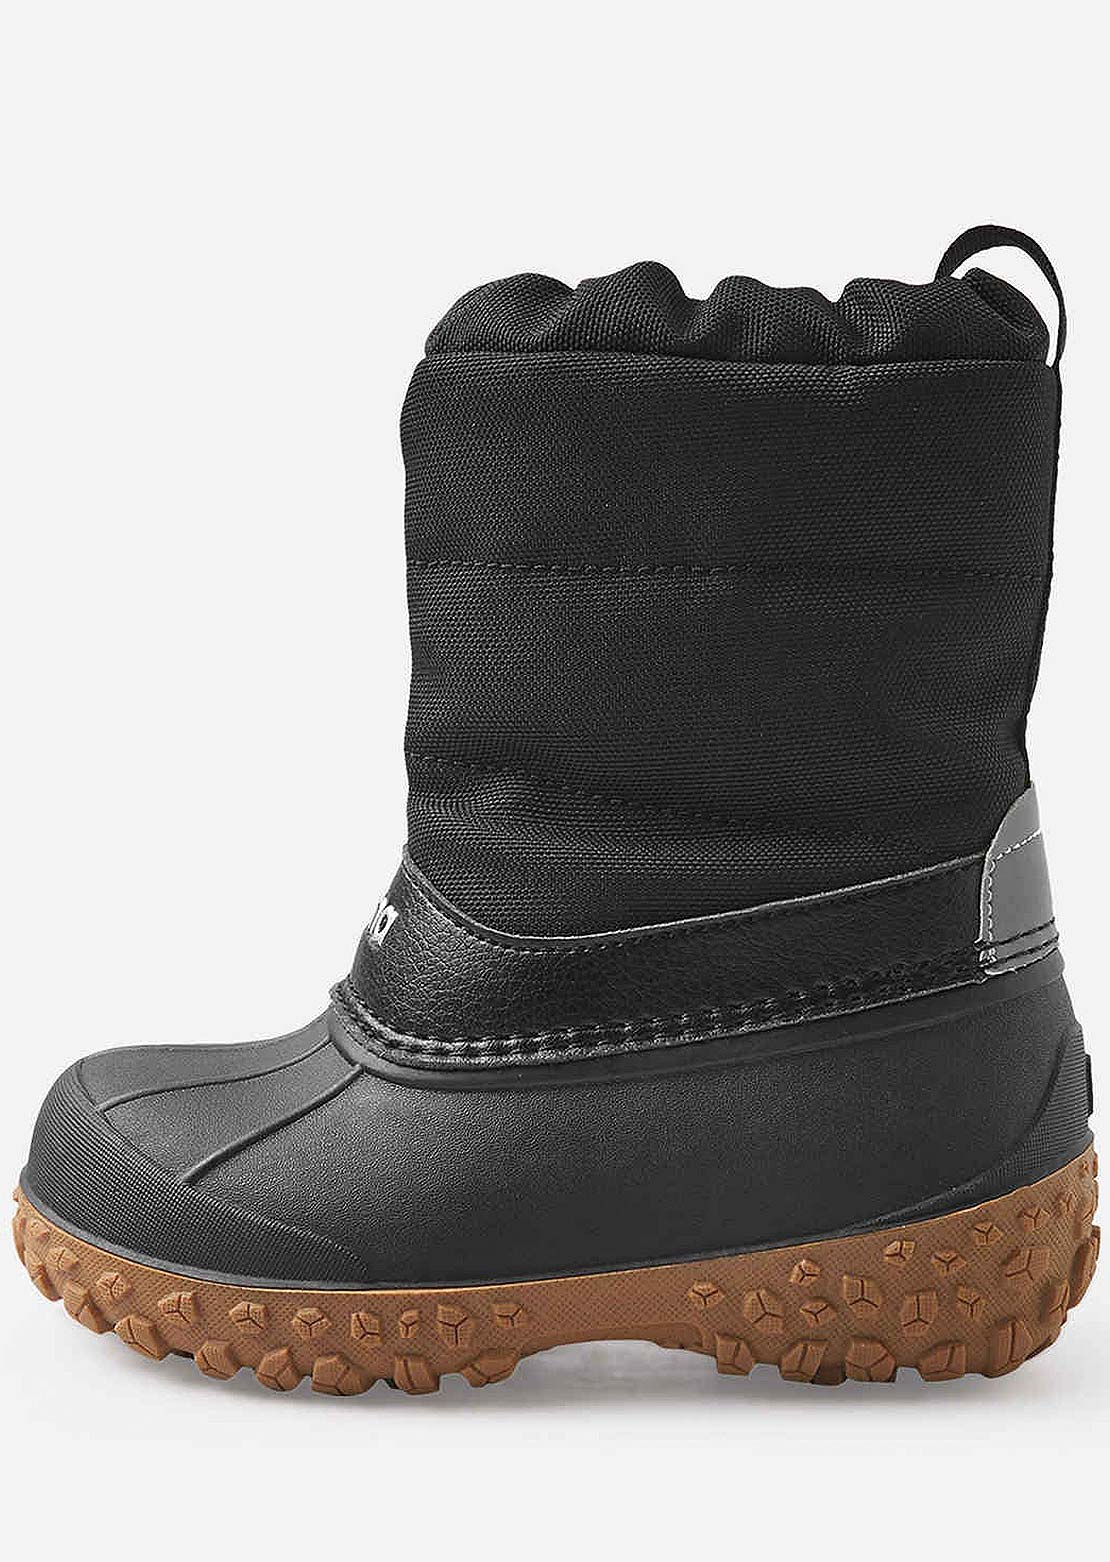 Reima Toddler Loskari Winter Boots Black